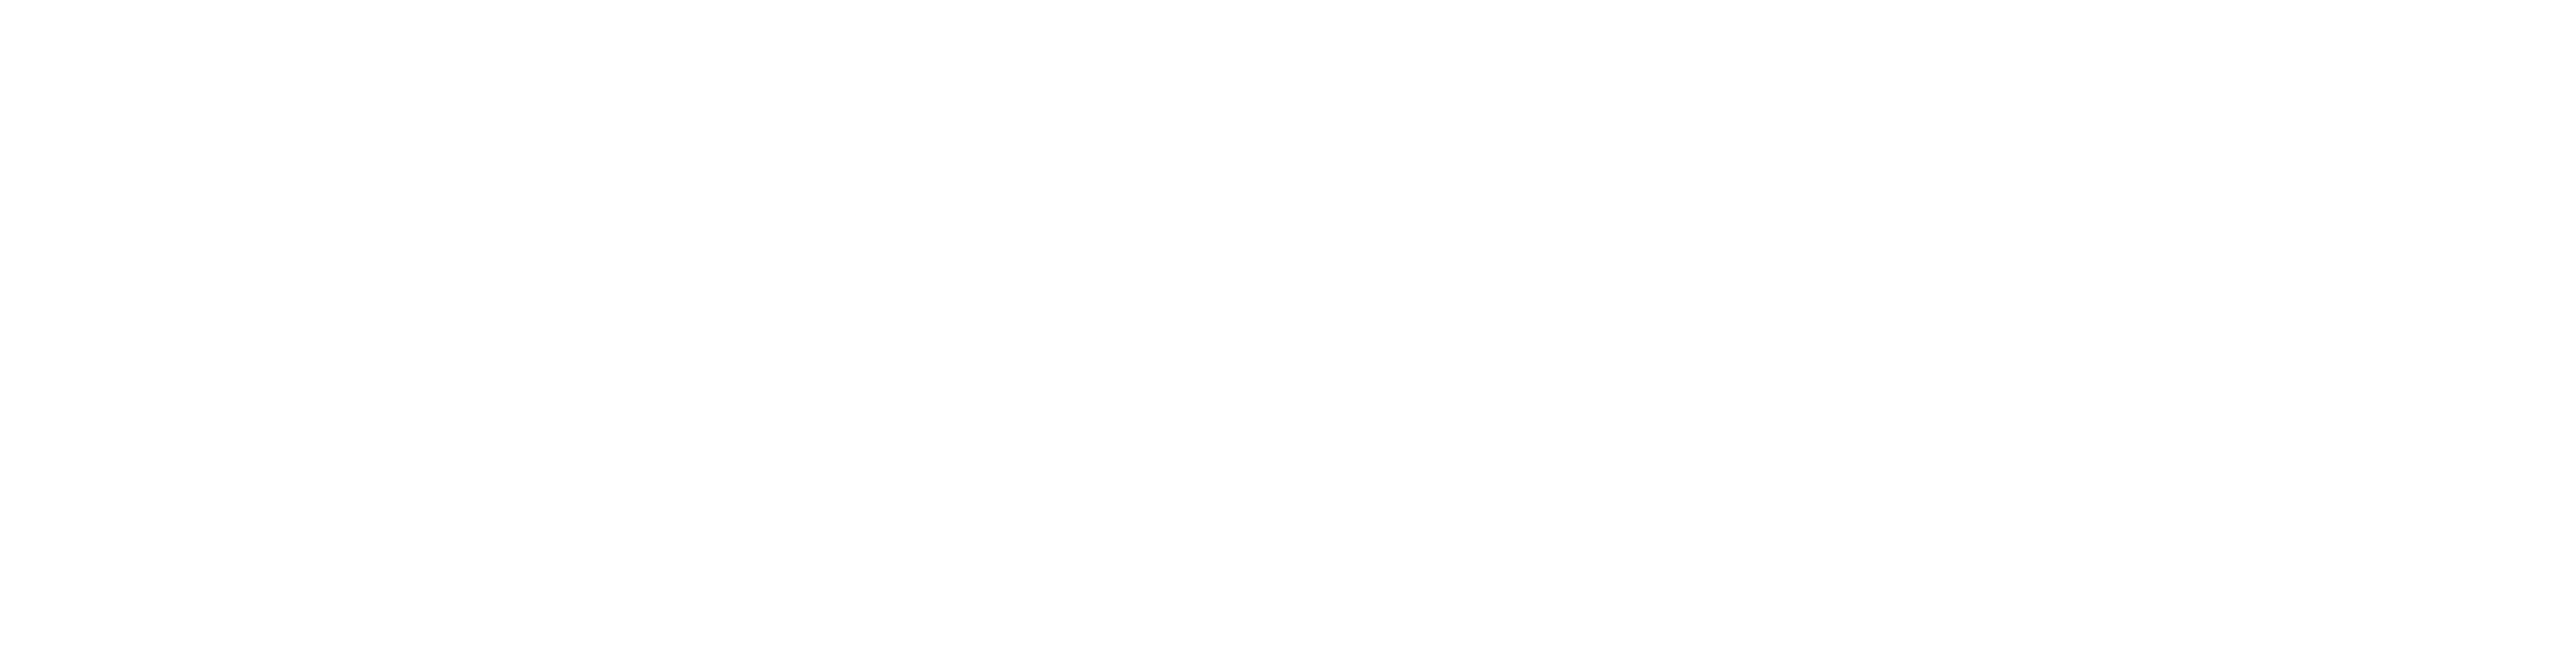 shelfCloud Logo